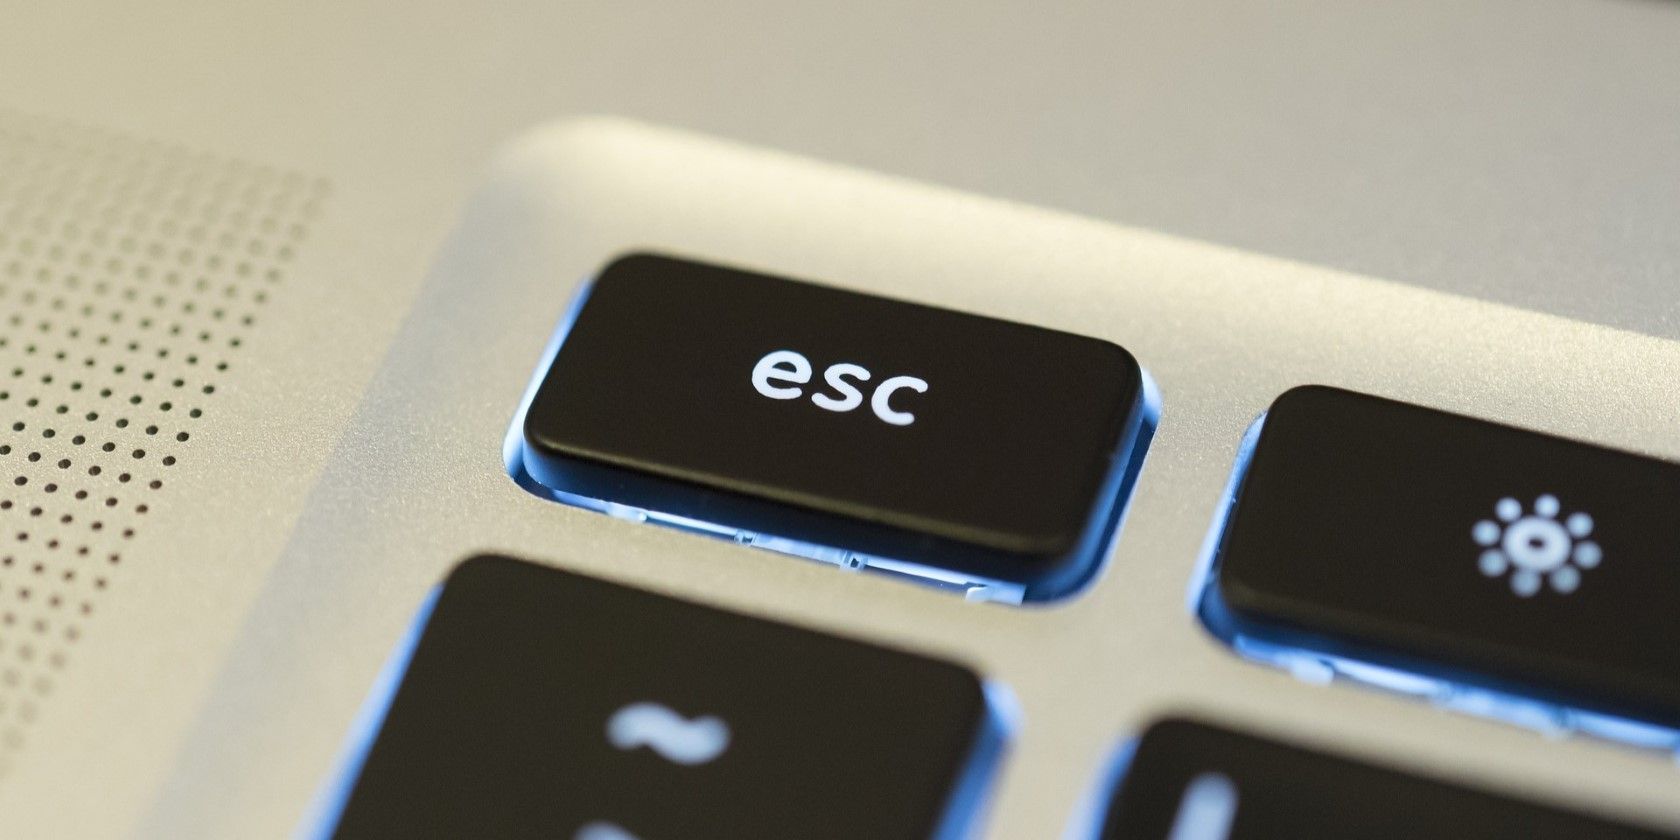 Esc key on laptop keyboard